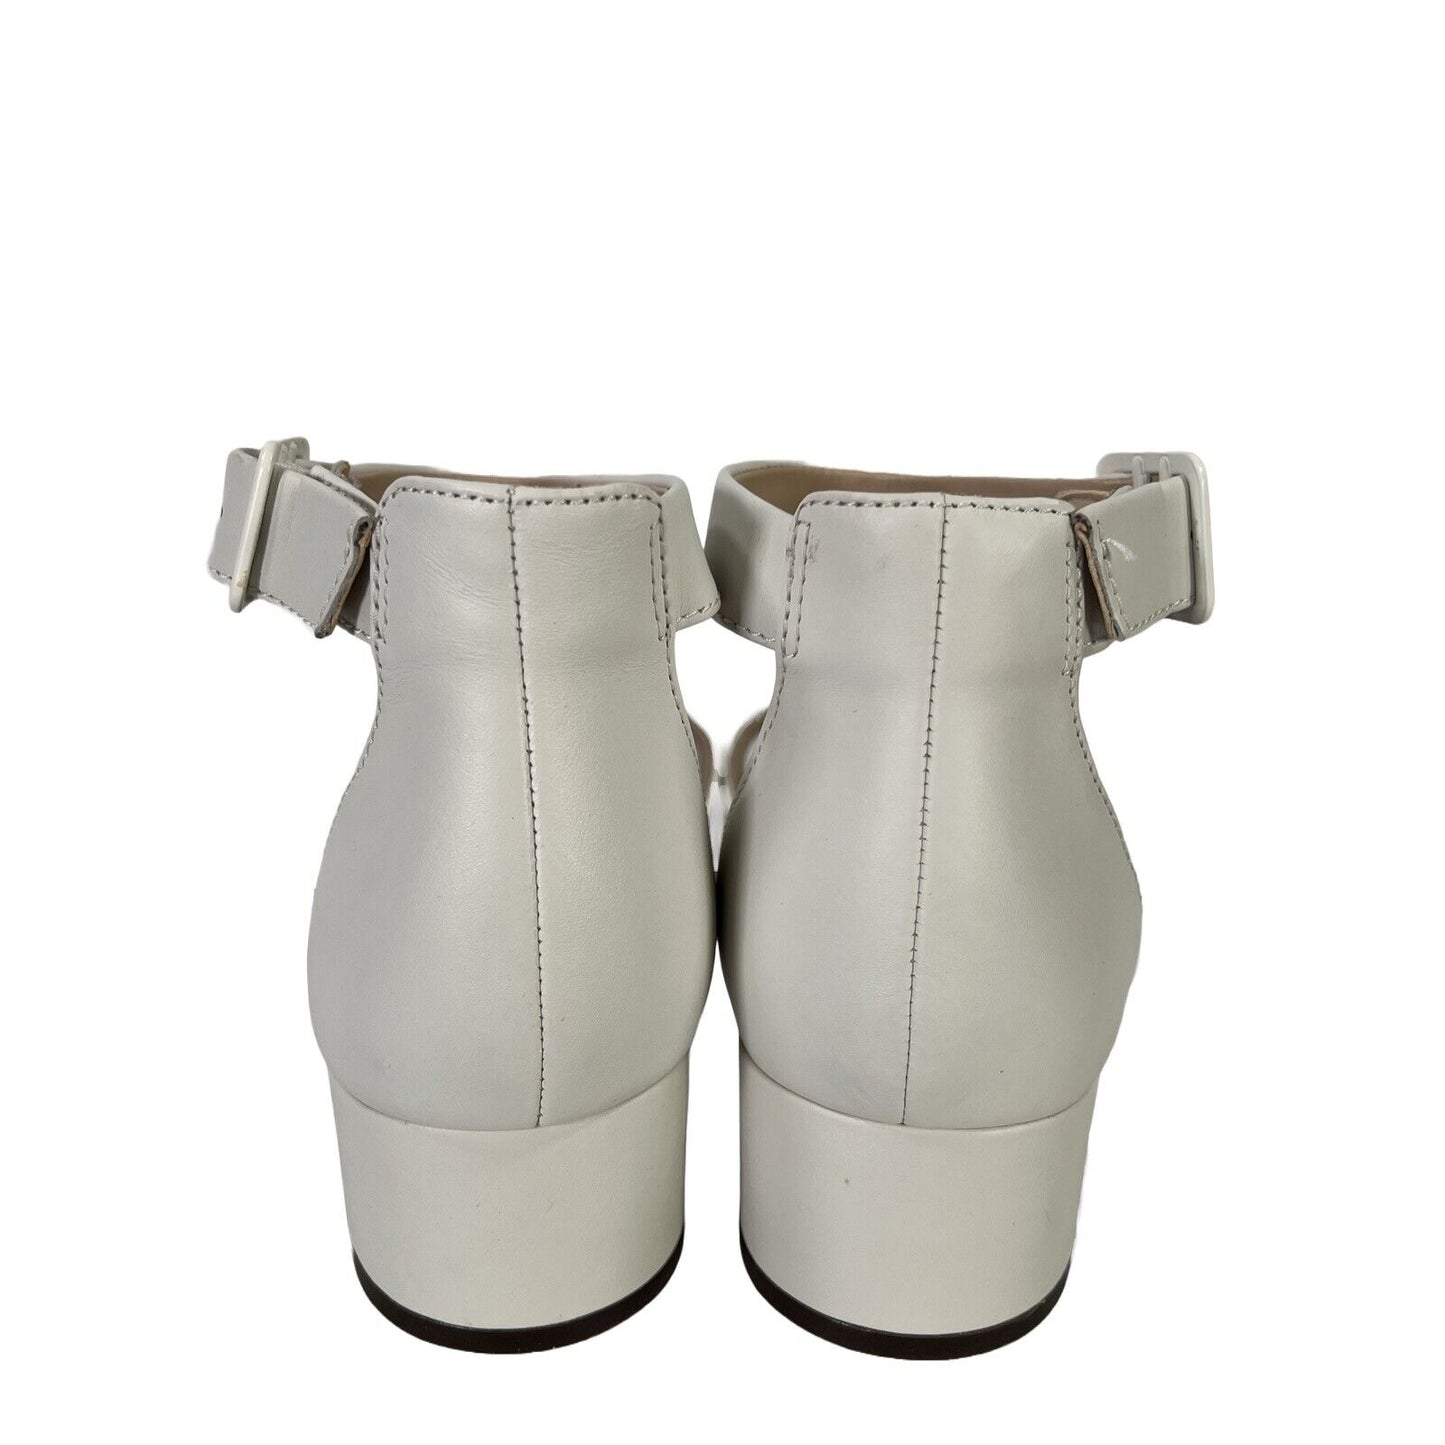 Clarks Collection Women's White Slingback Block Heels - 9.5